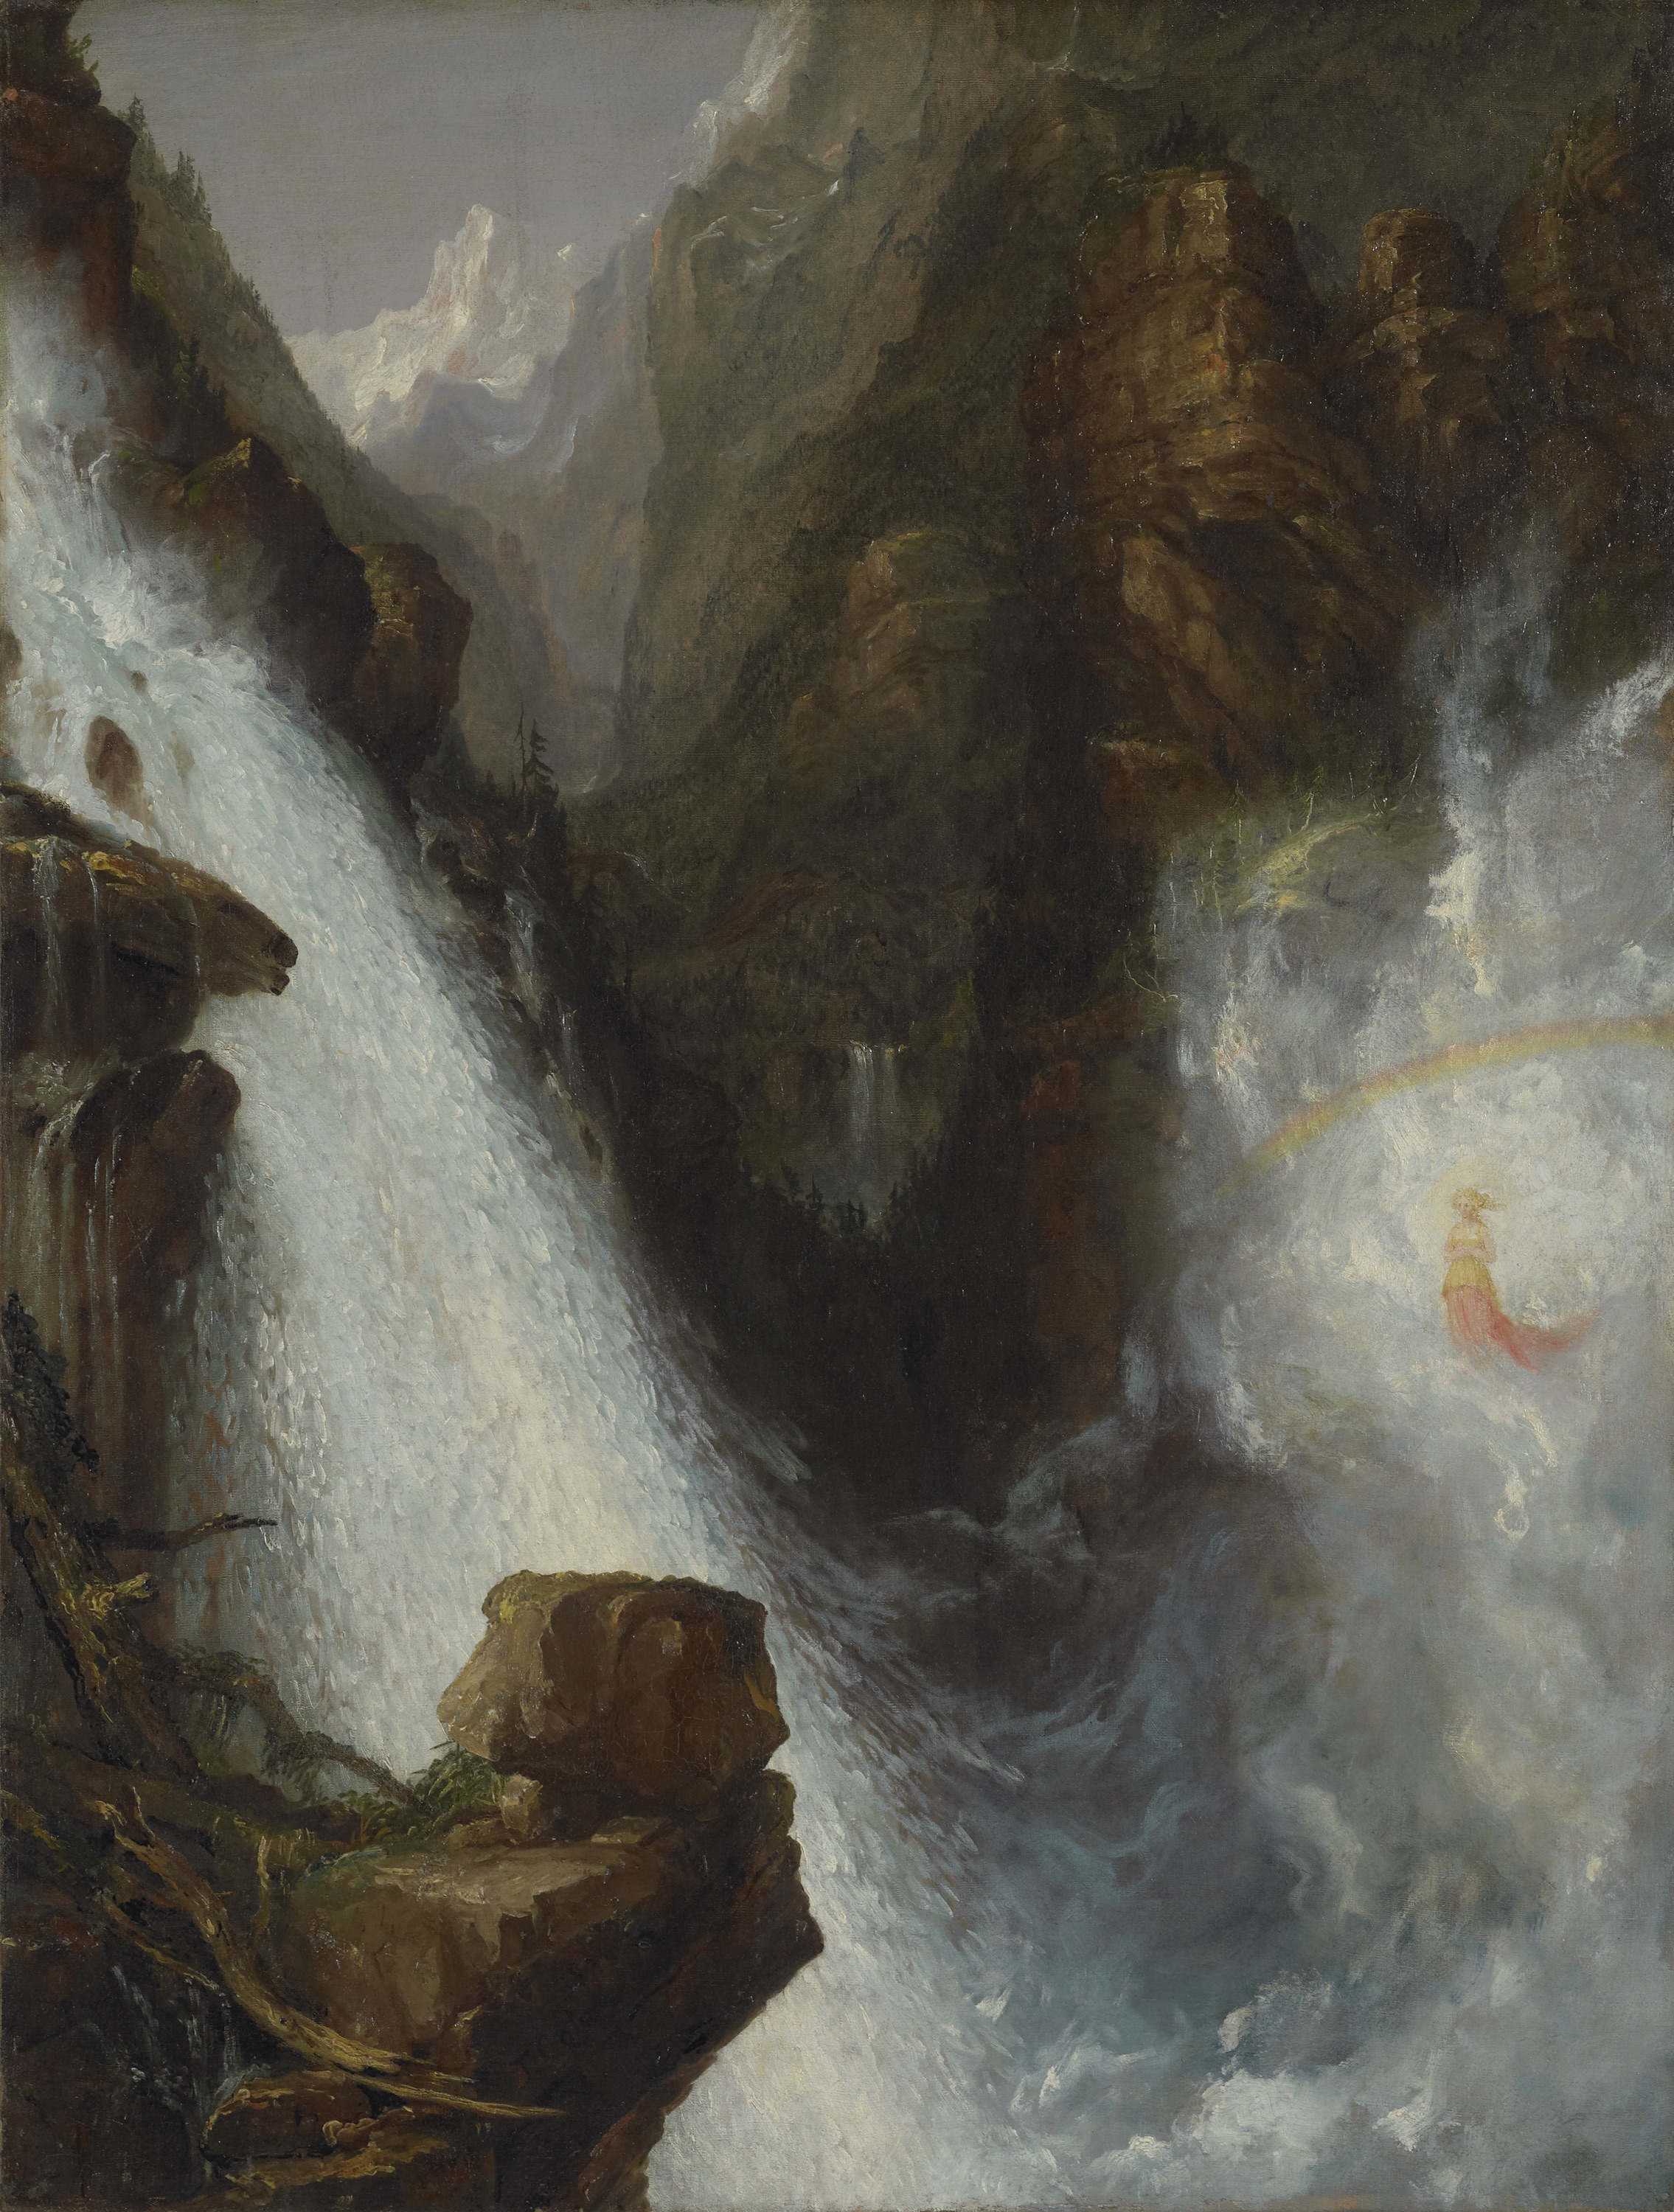 مشهد من مانفرد لبَيرون by Thomas Cole - 1833 - 127 x 96.5 سم 